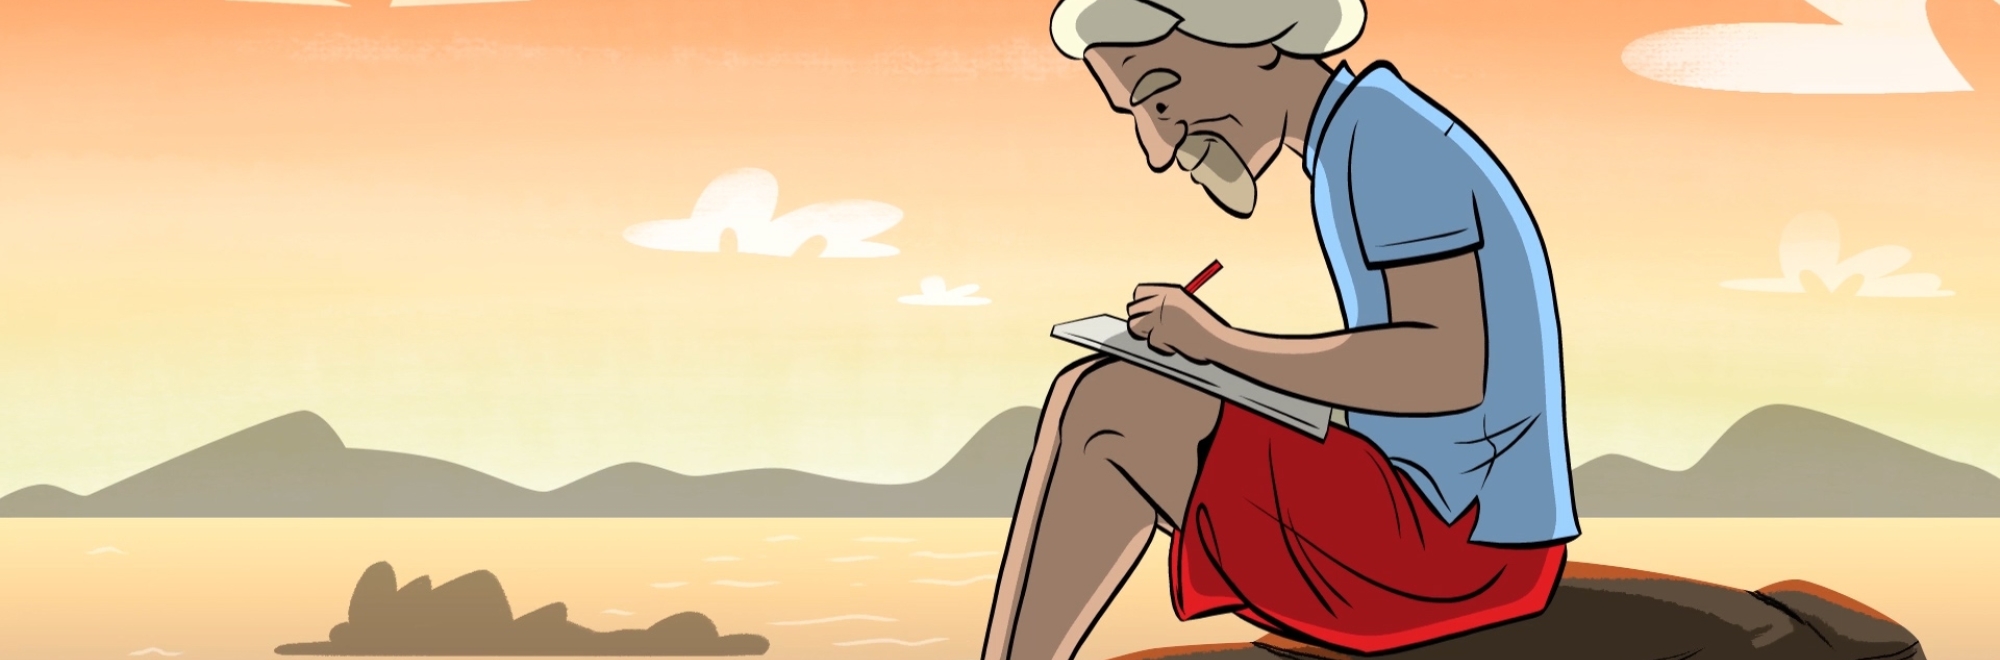 12 animated short films tell the stories of Richard Branson’s adventures